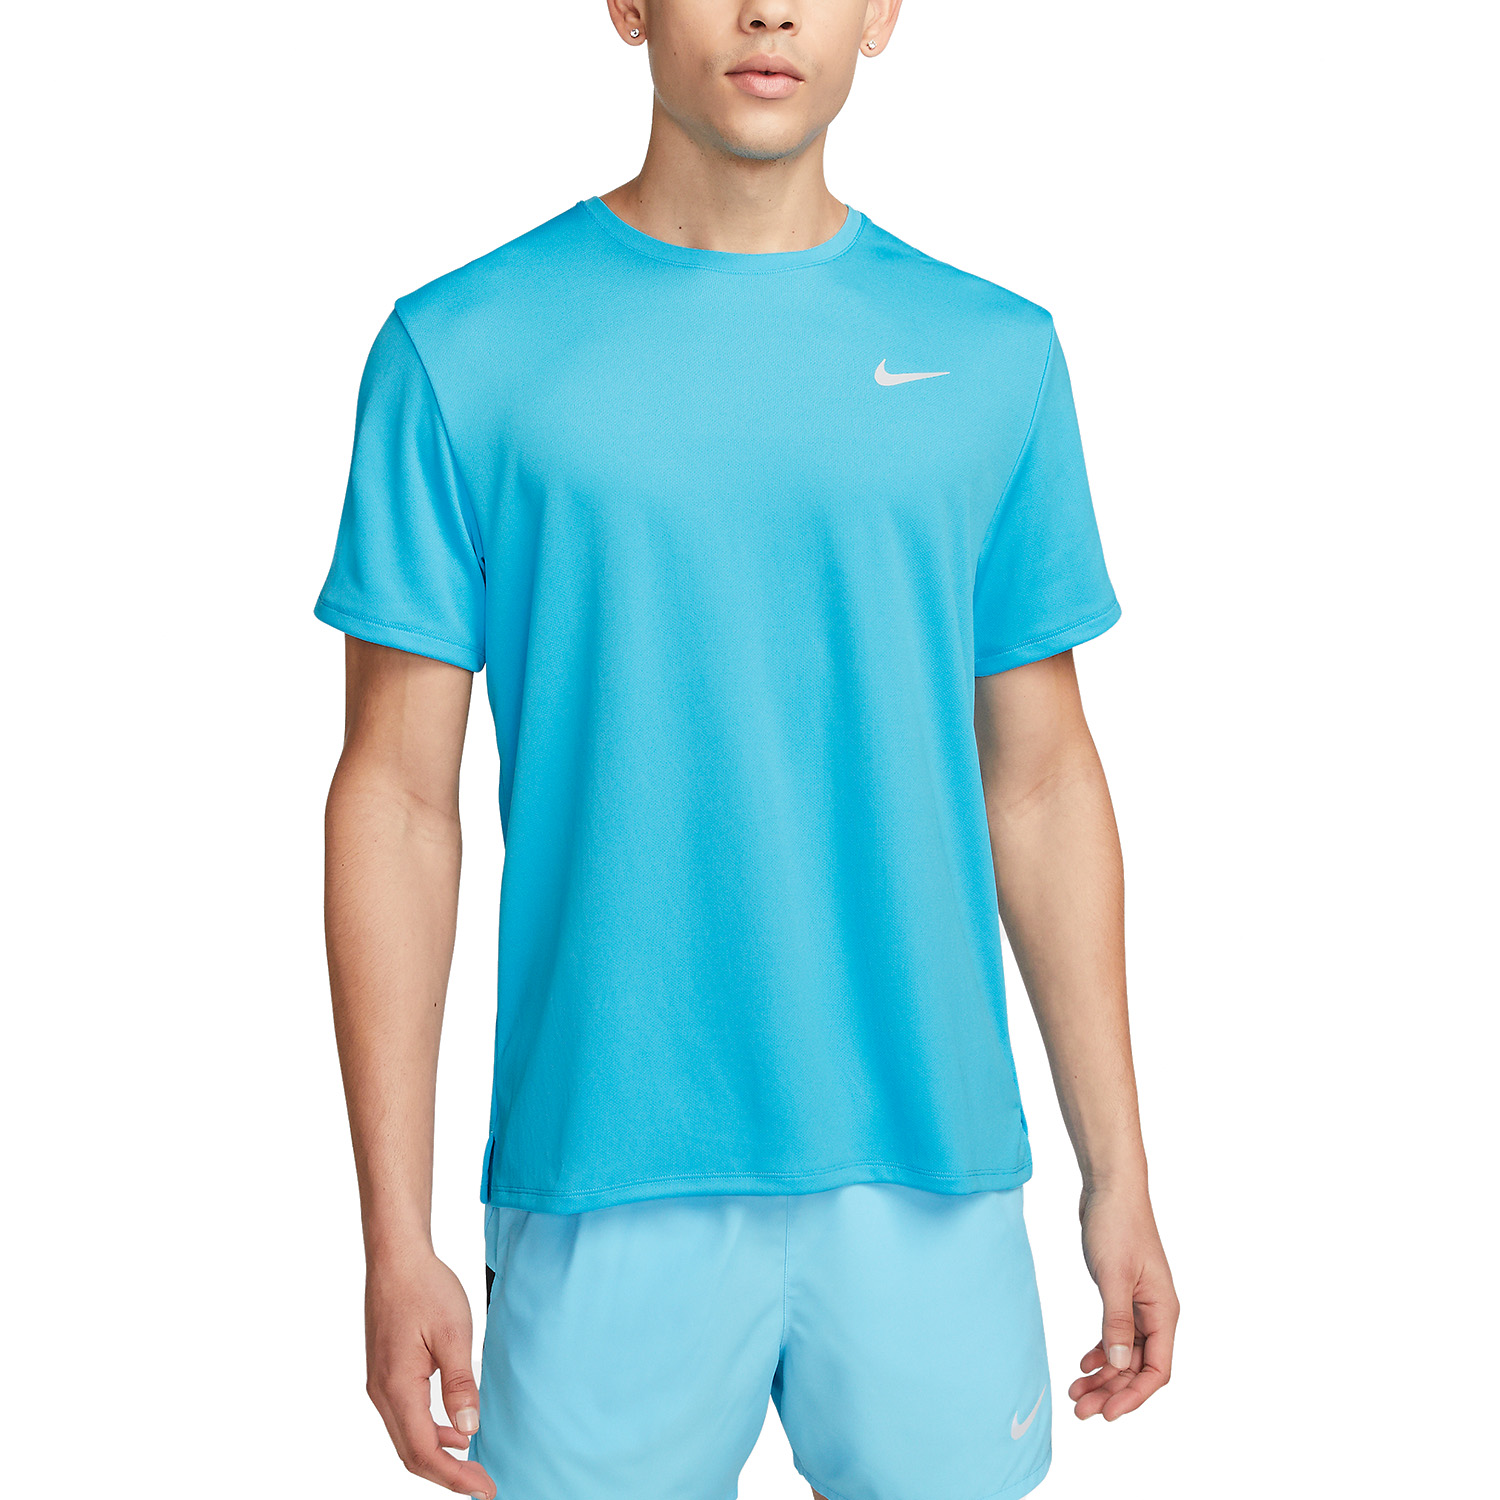 Pef Idear Comandante Nike Dri-FIT UV Run Division Camiseta Running Hombre - Baltic